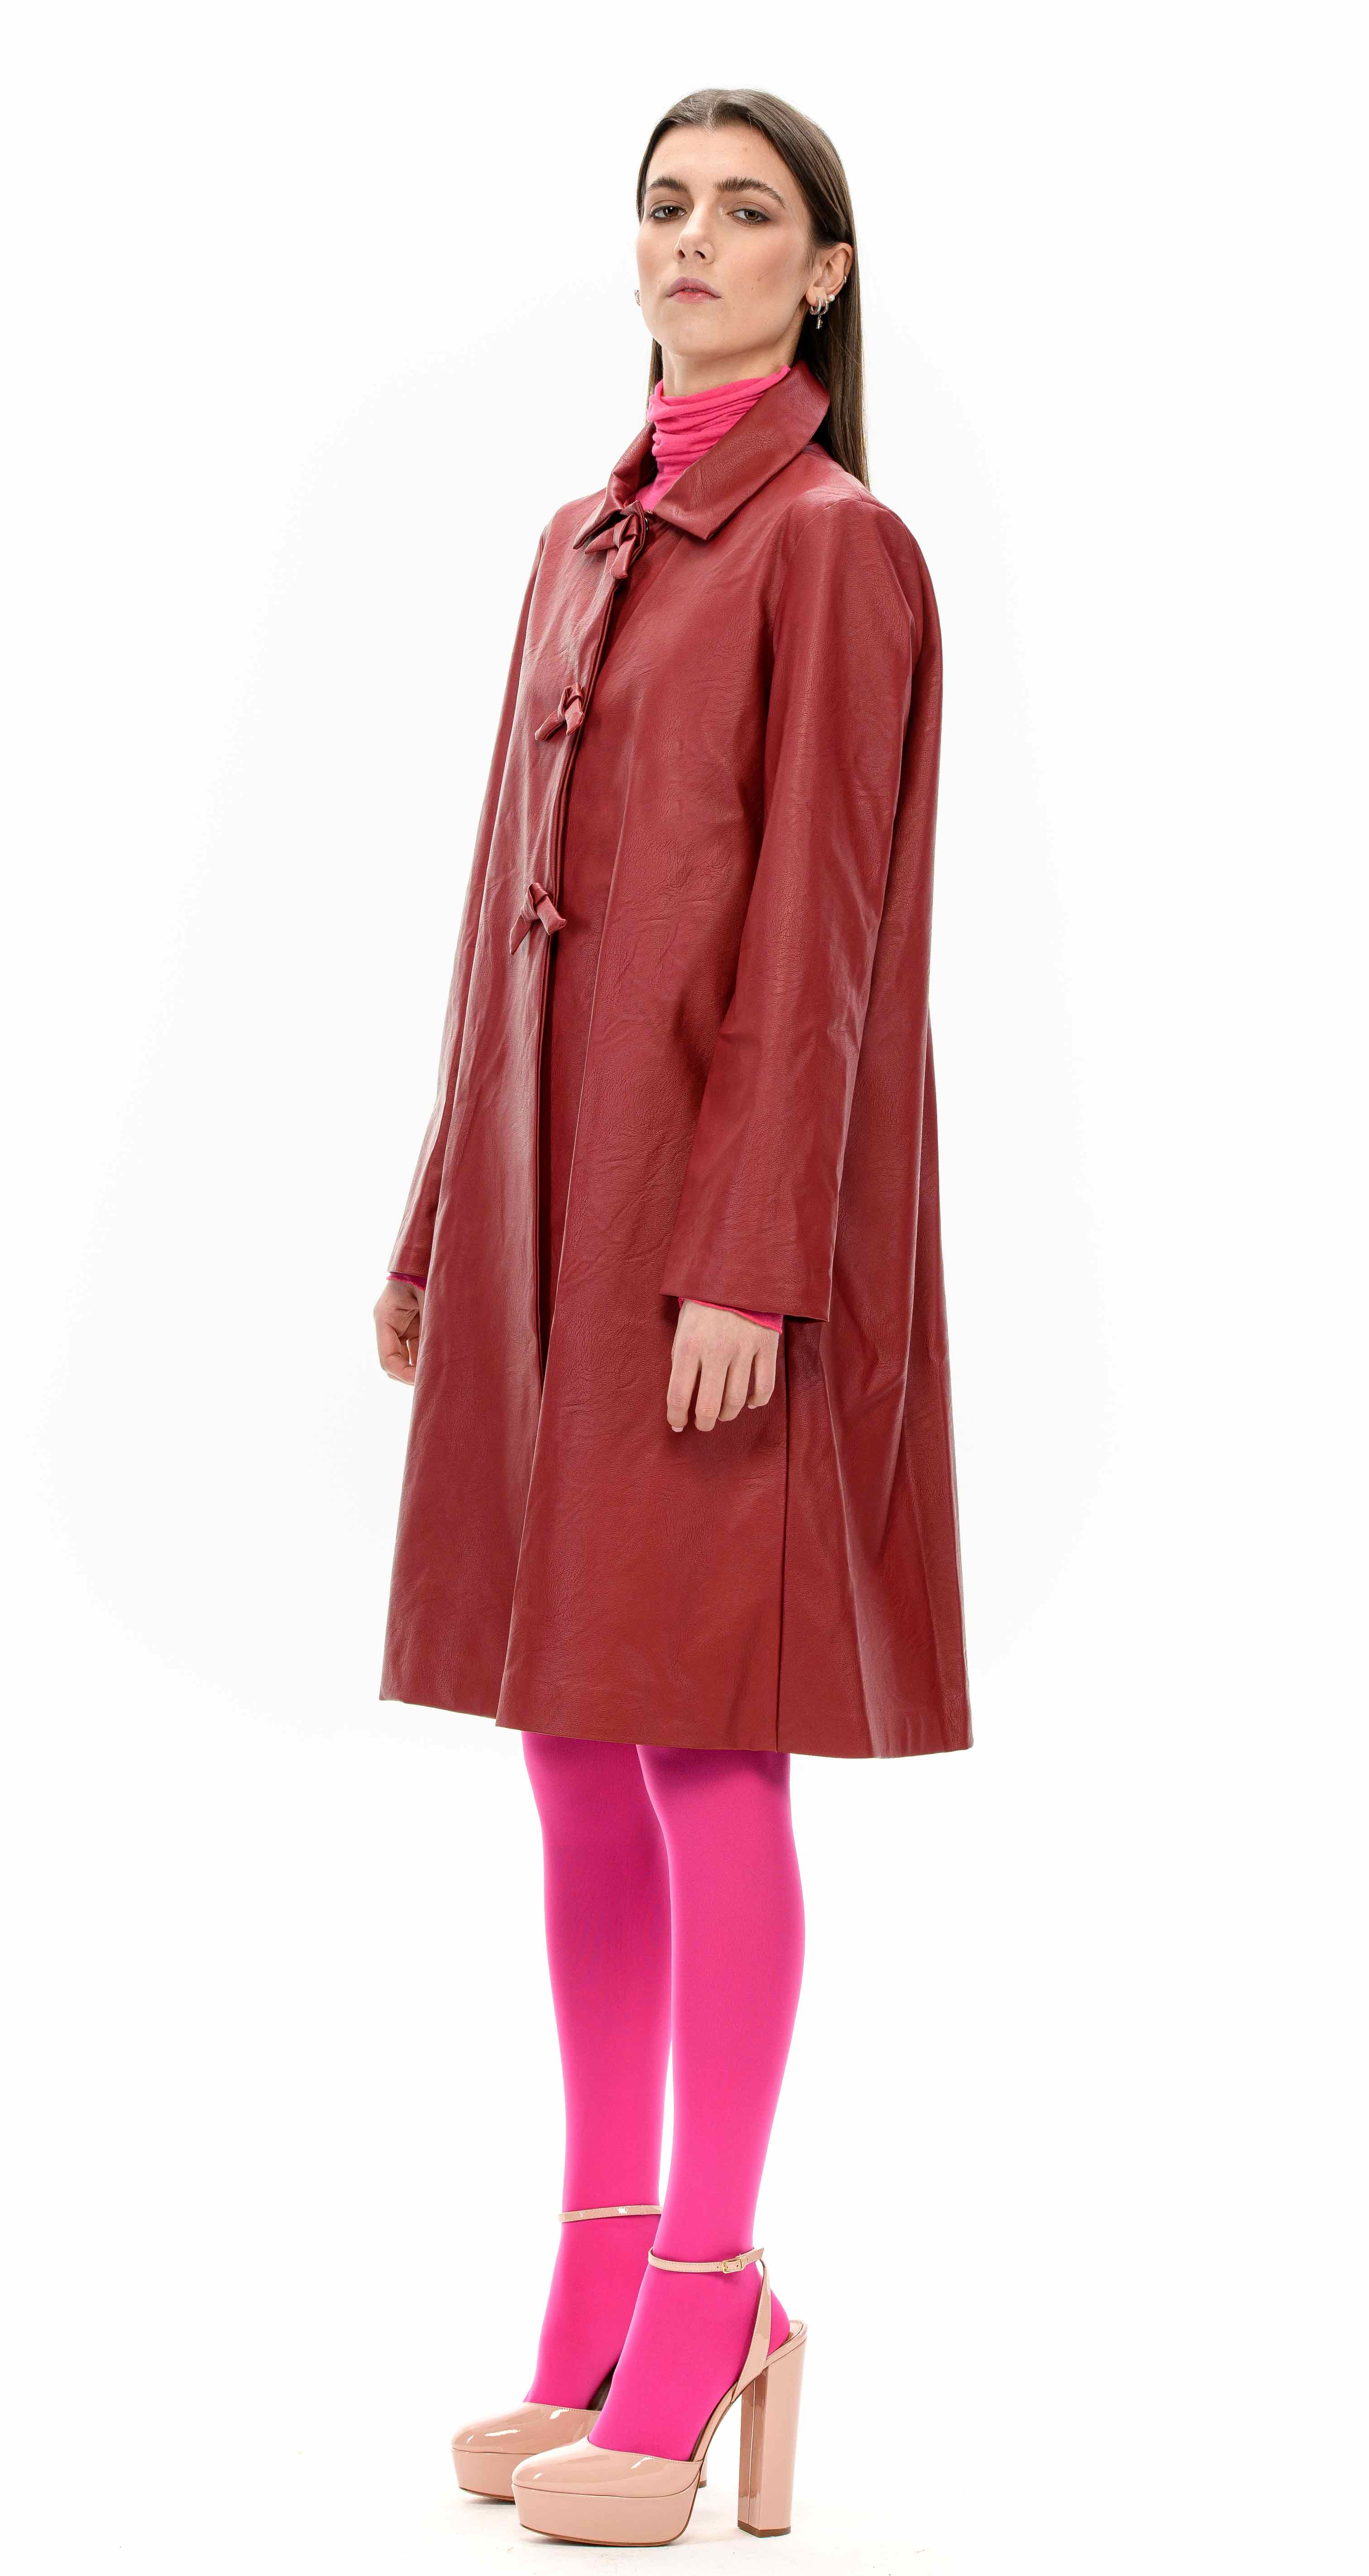 ARADIA Eco-leather overcoat